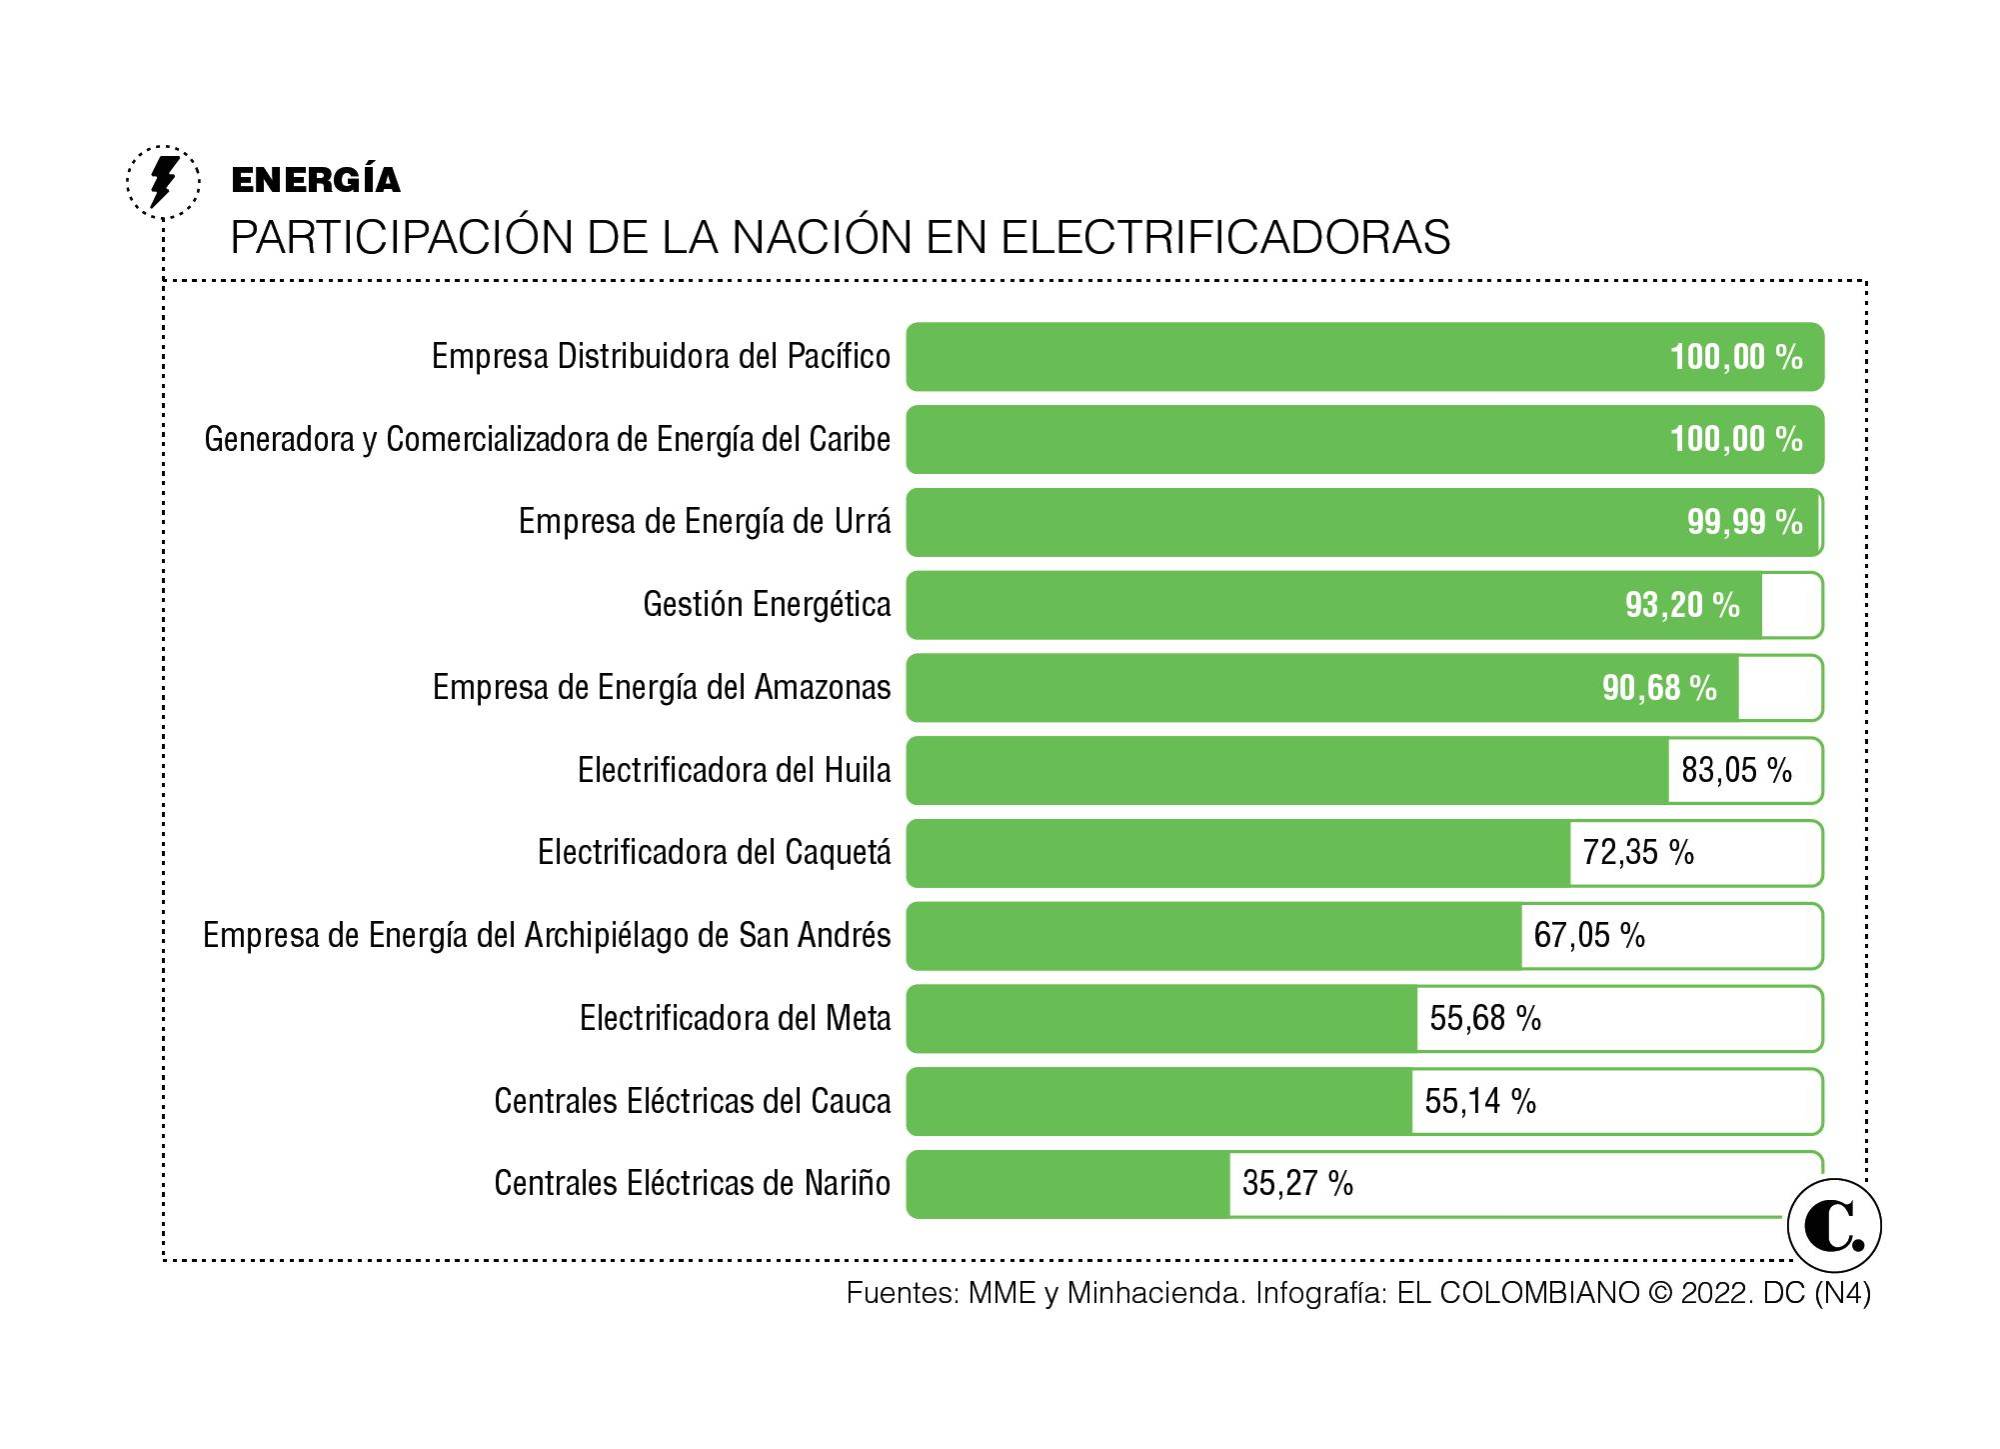 Venta de electrificadoras darían a Nación $3 billones